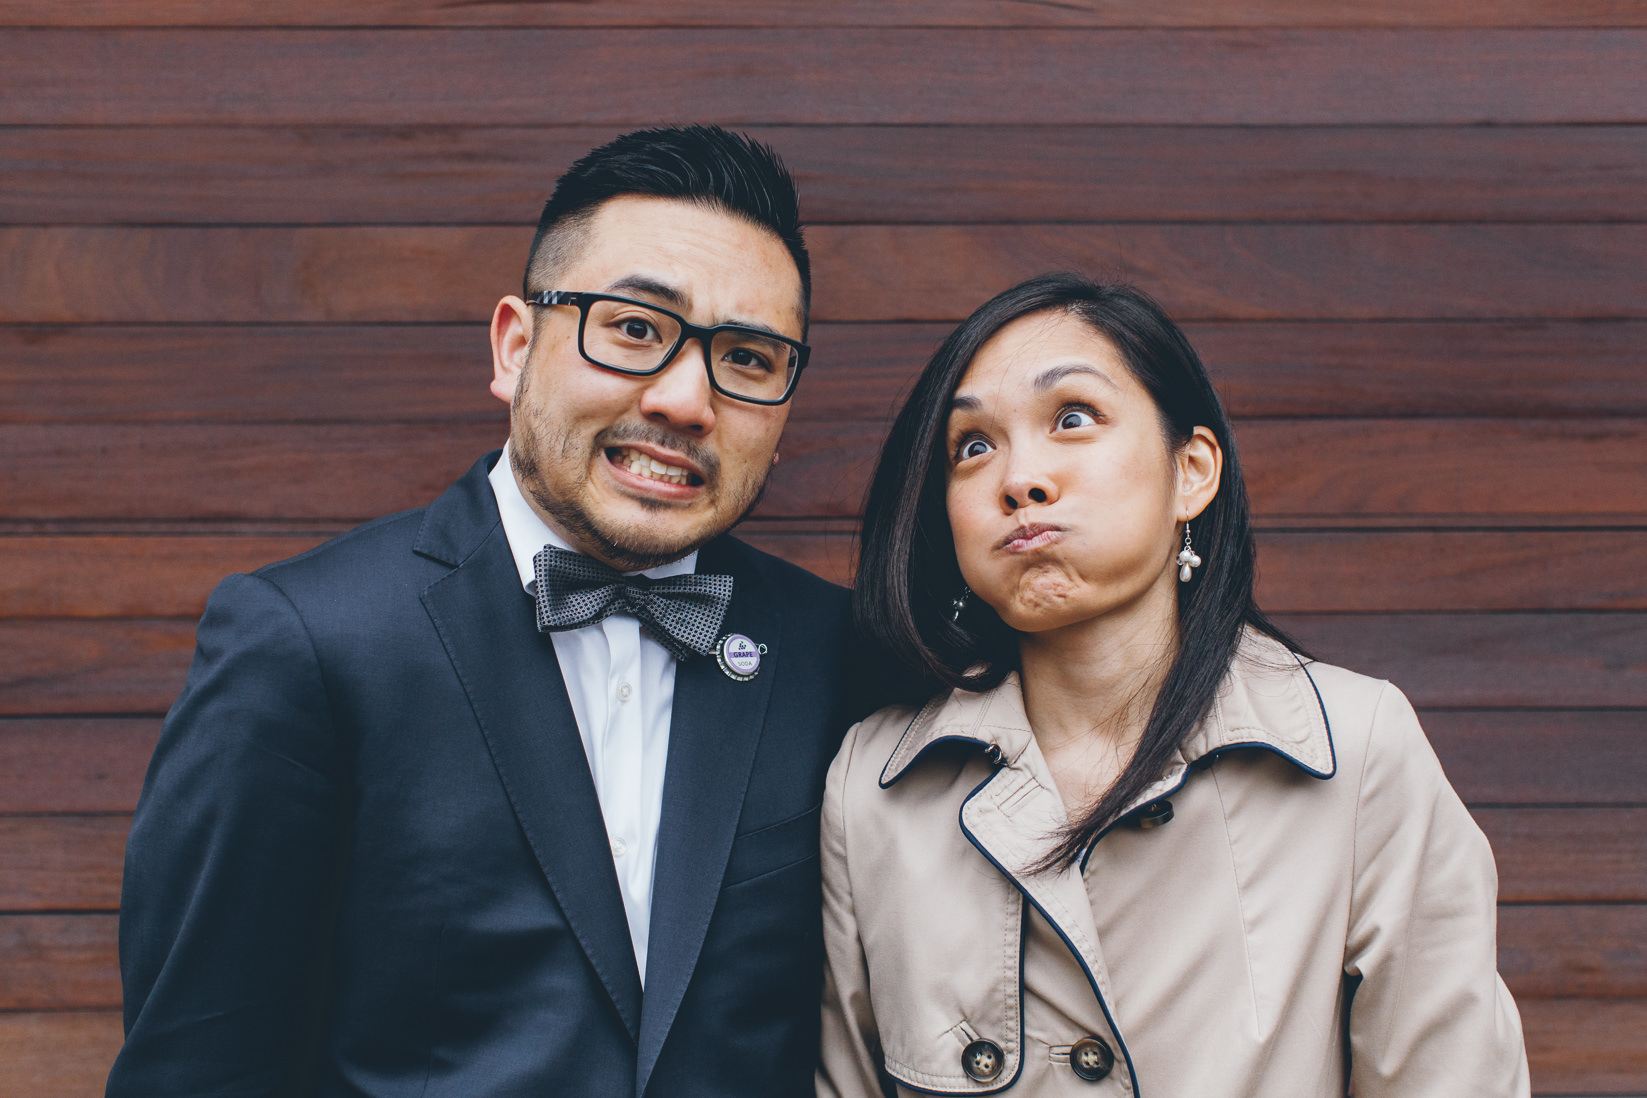 Funny Bride & Groom portraits | Nathan Phillips Square | Toronto City Hall Wedding | EIGHTYFIFTH STREET PHOTOGRAPHY